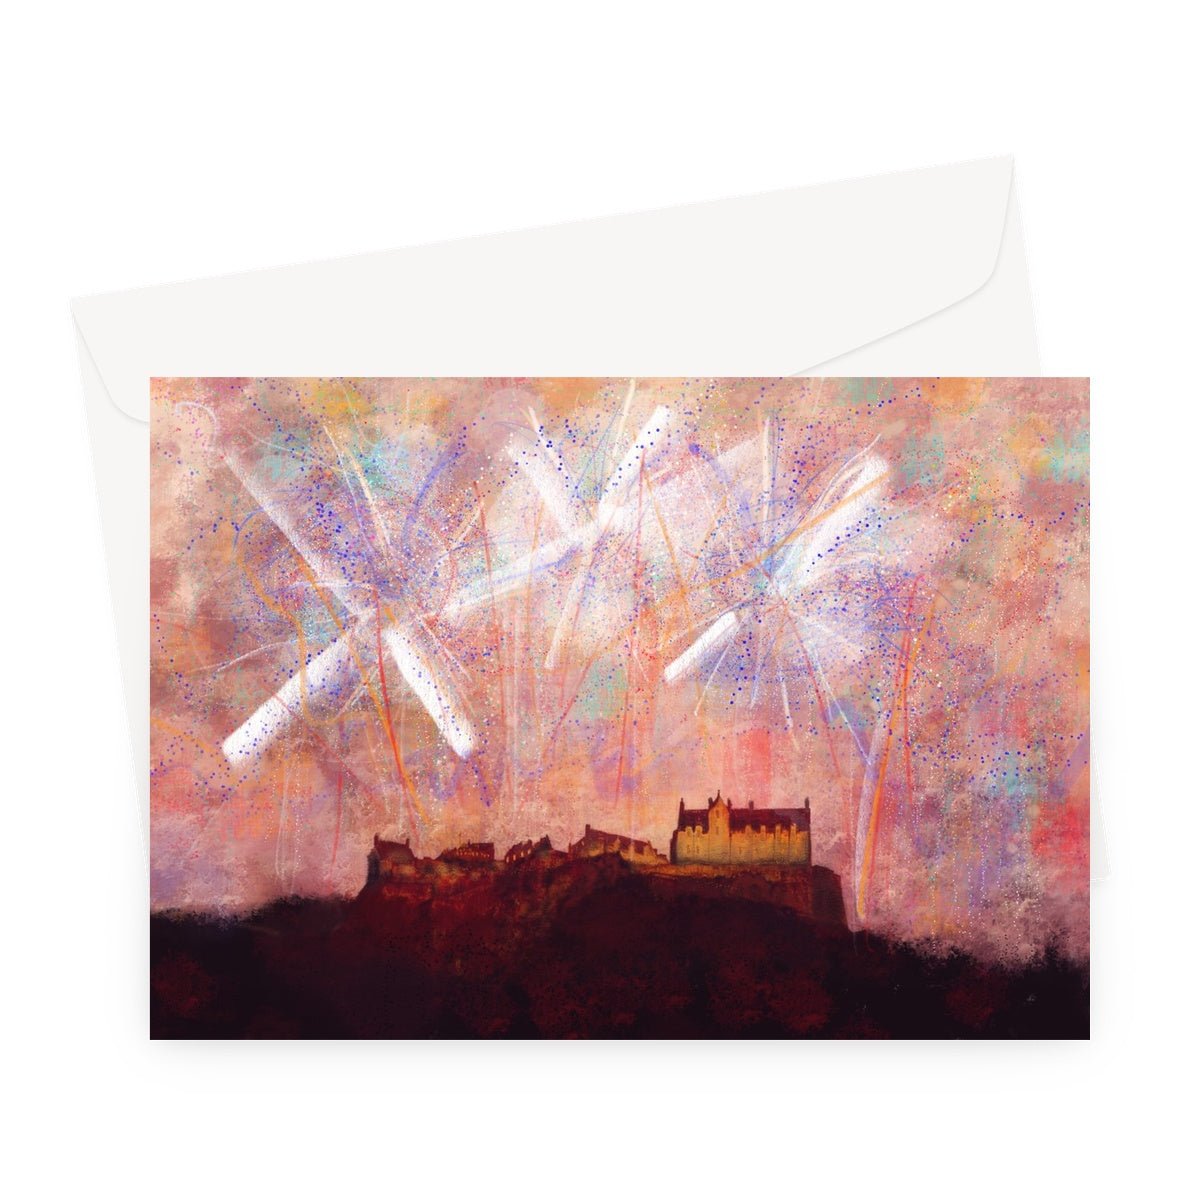 Edinburgh Castle Fireworks Art Gifts Greeting Card-Greetings Cards-Edinburgh & Glasgow Art Gallery-A5 Landscape-1 Card-Paintings, Prints, Homeware, Art Gifts From Scotland By Scottish Artist Kevin Hunter